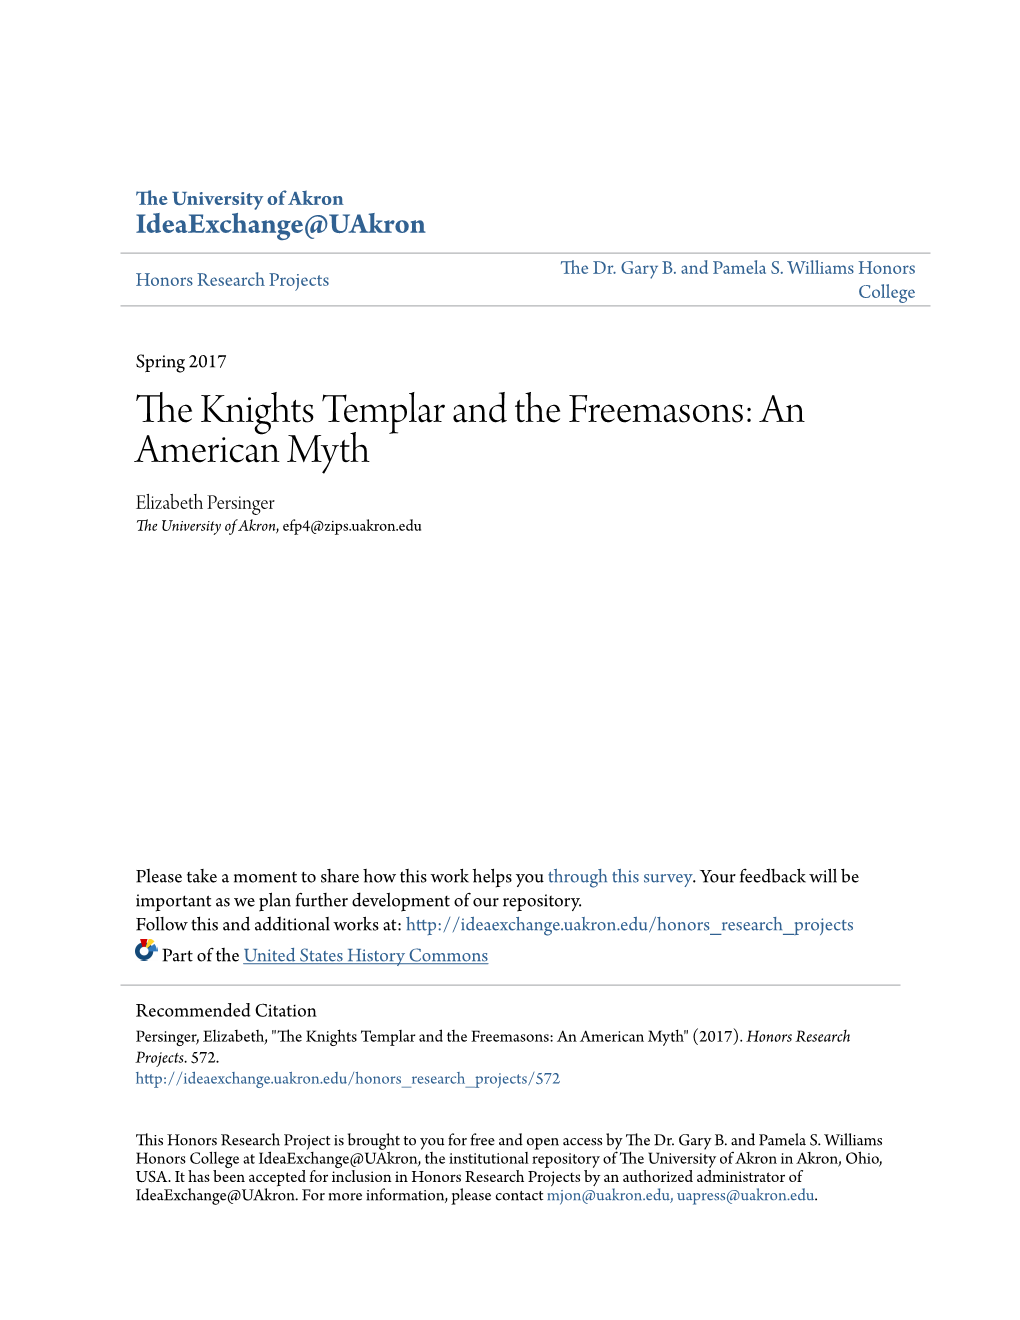 The Knights Templar and the Freemasons: an American Myth Elizabeth Persinger the University of Akron, Efp4@Zips.Uakron.Edu